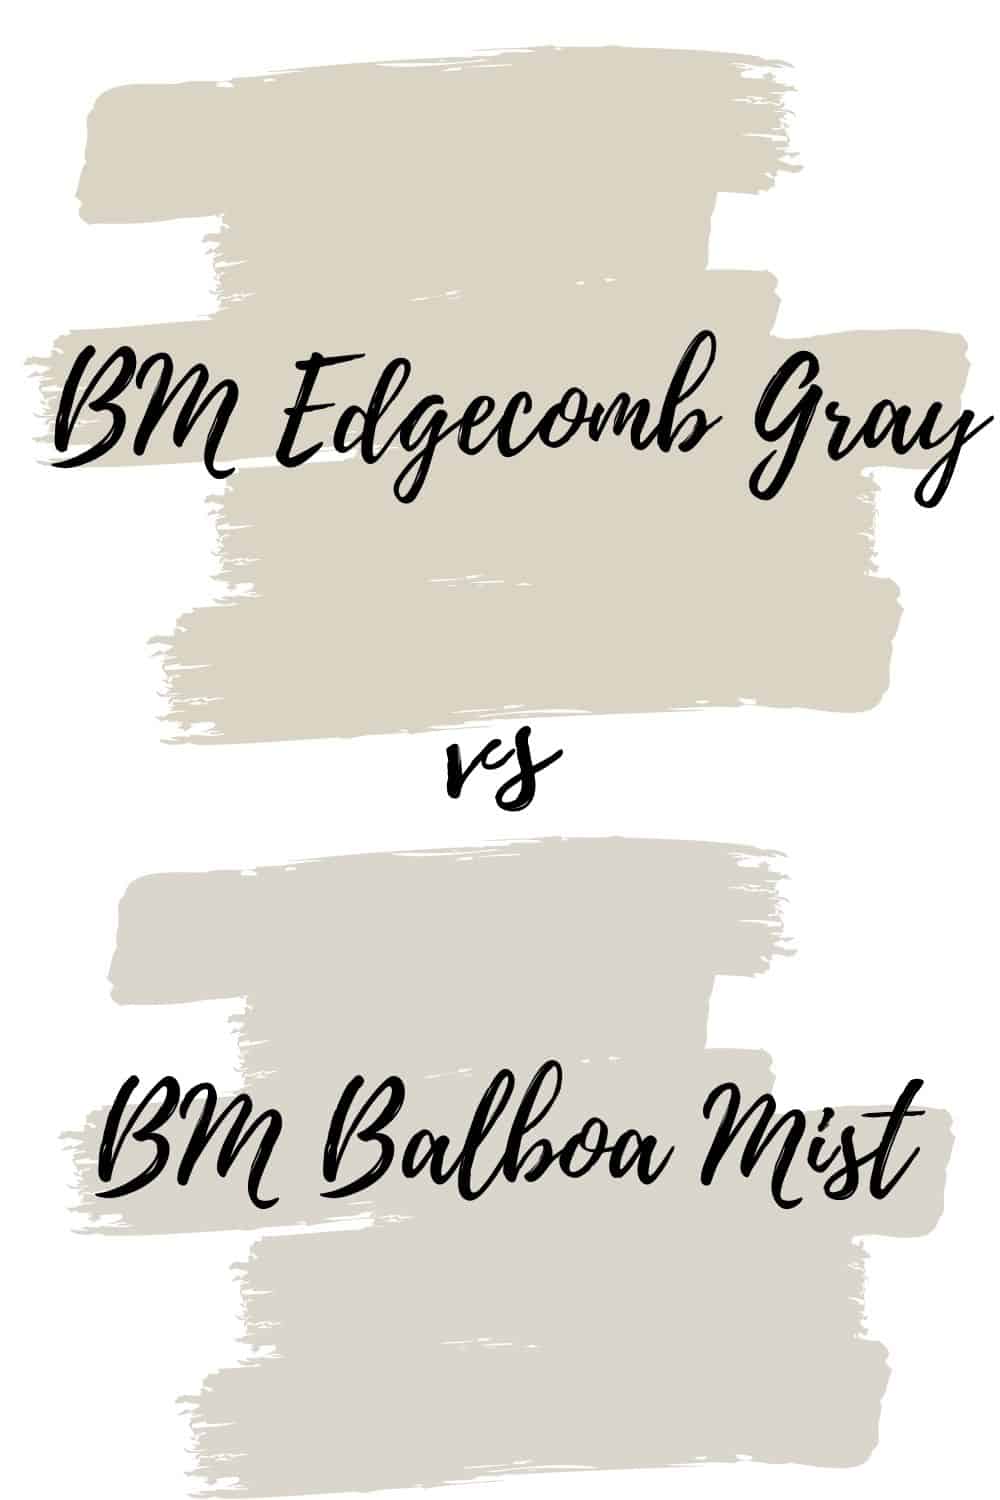 Edgecomb Gray Vs Balboa 